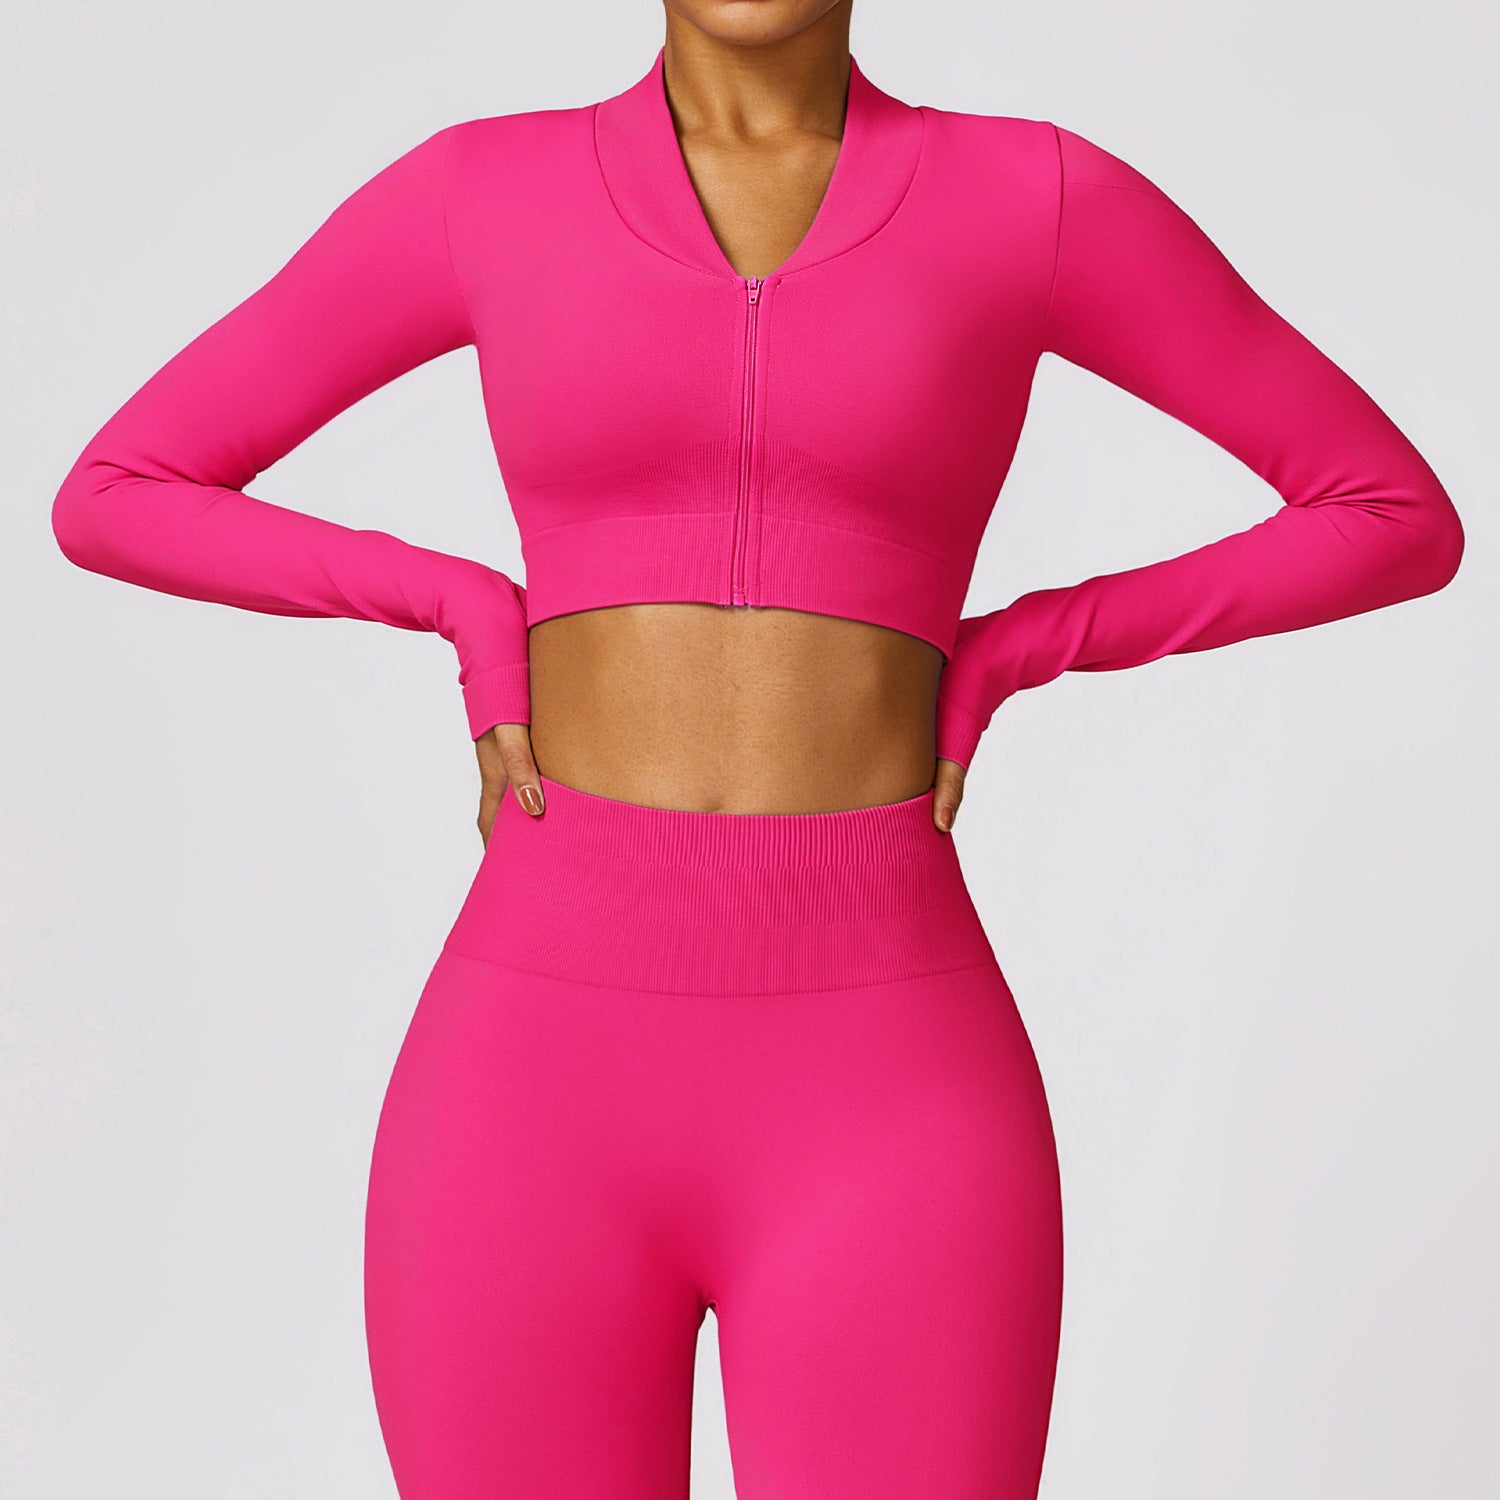 Gleeter Workout Jacket for Women Full Zip Long Sleeve Yoga